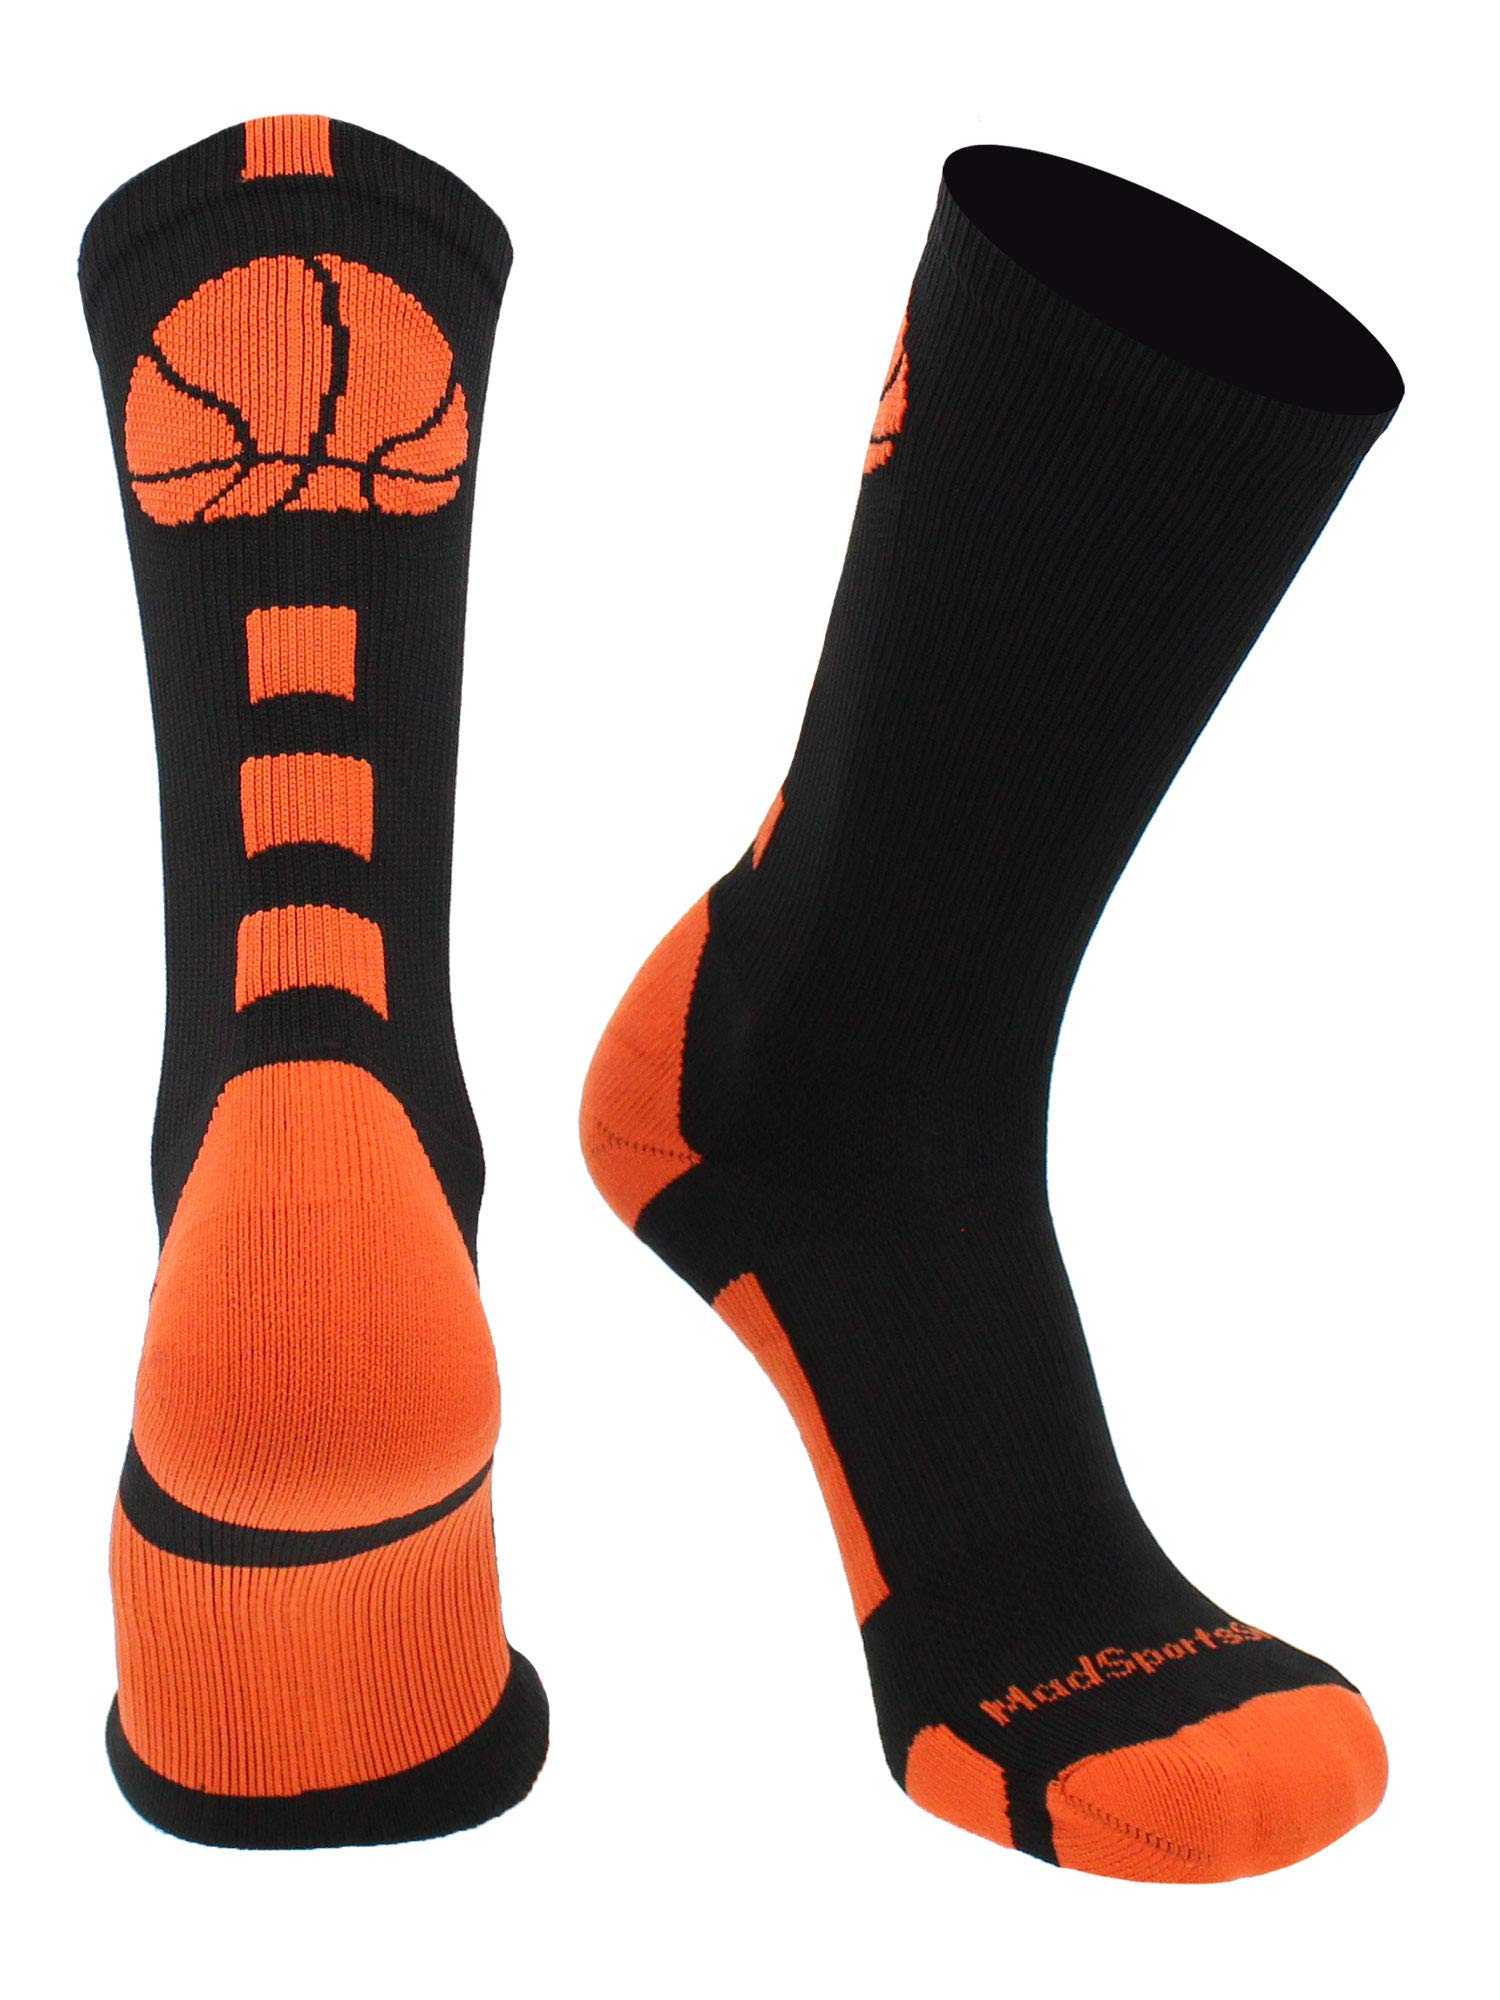 MadSportsStuff Basketball Socks with Basketball Logo crew Socks (BlackOrange, X-Large)